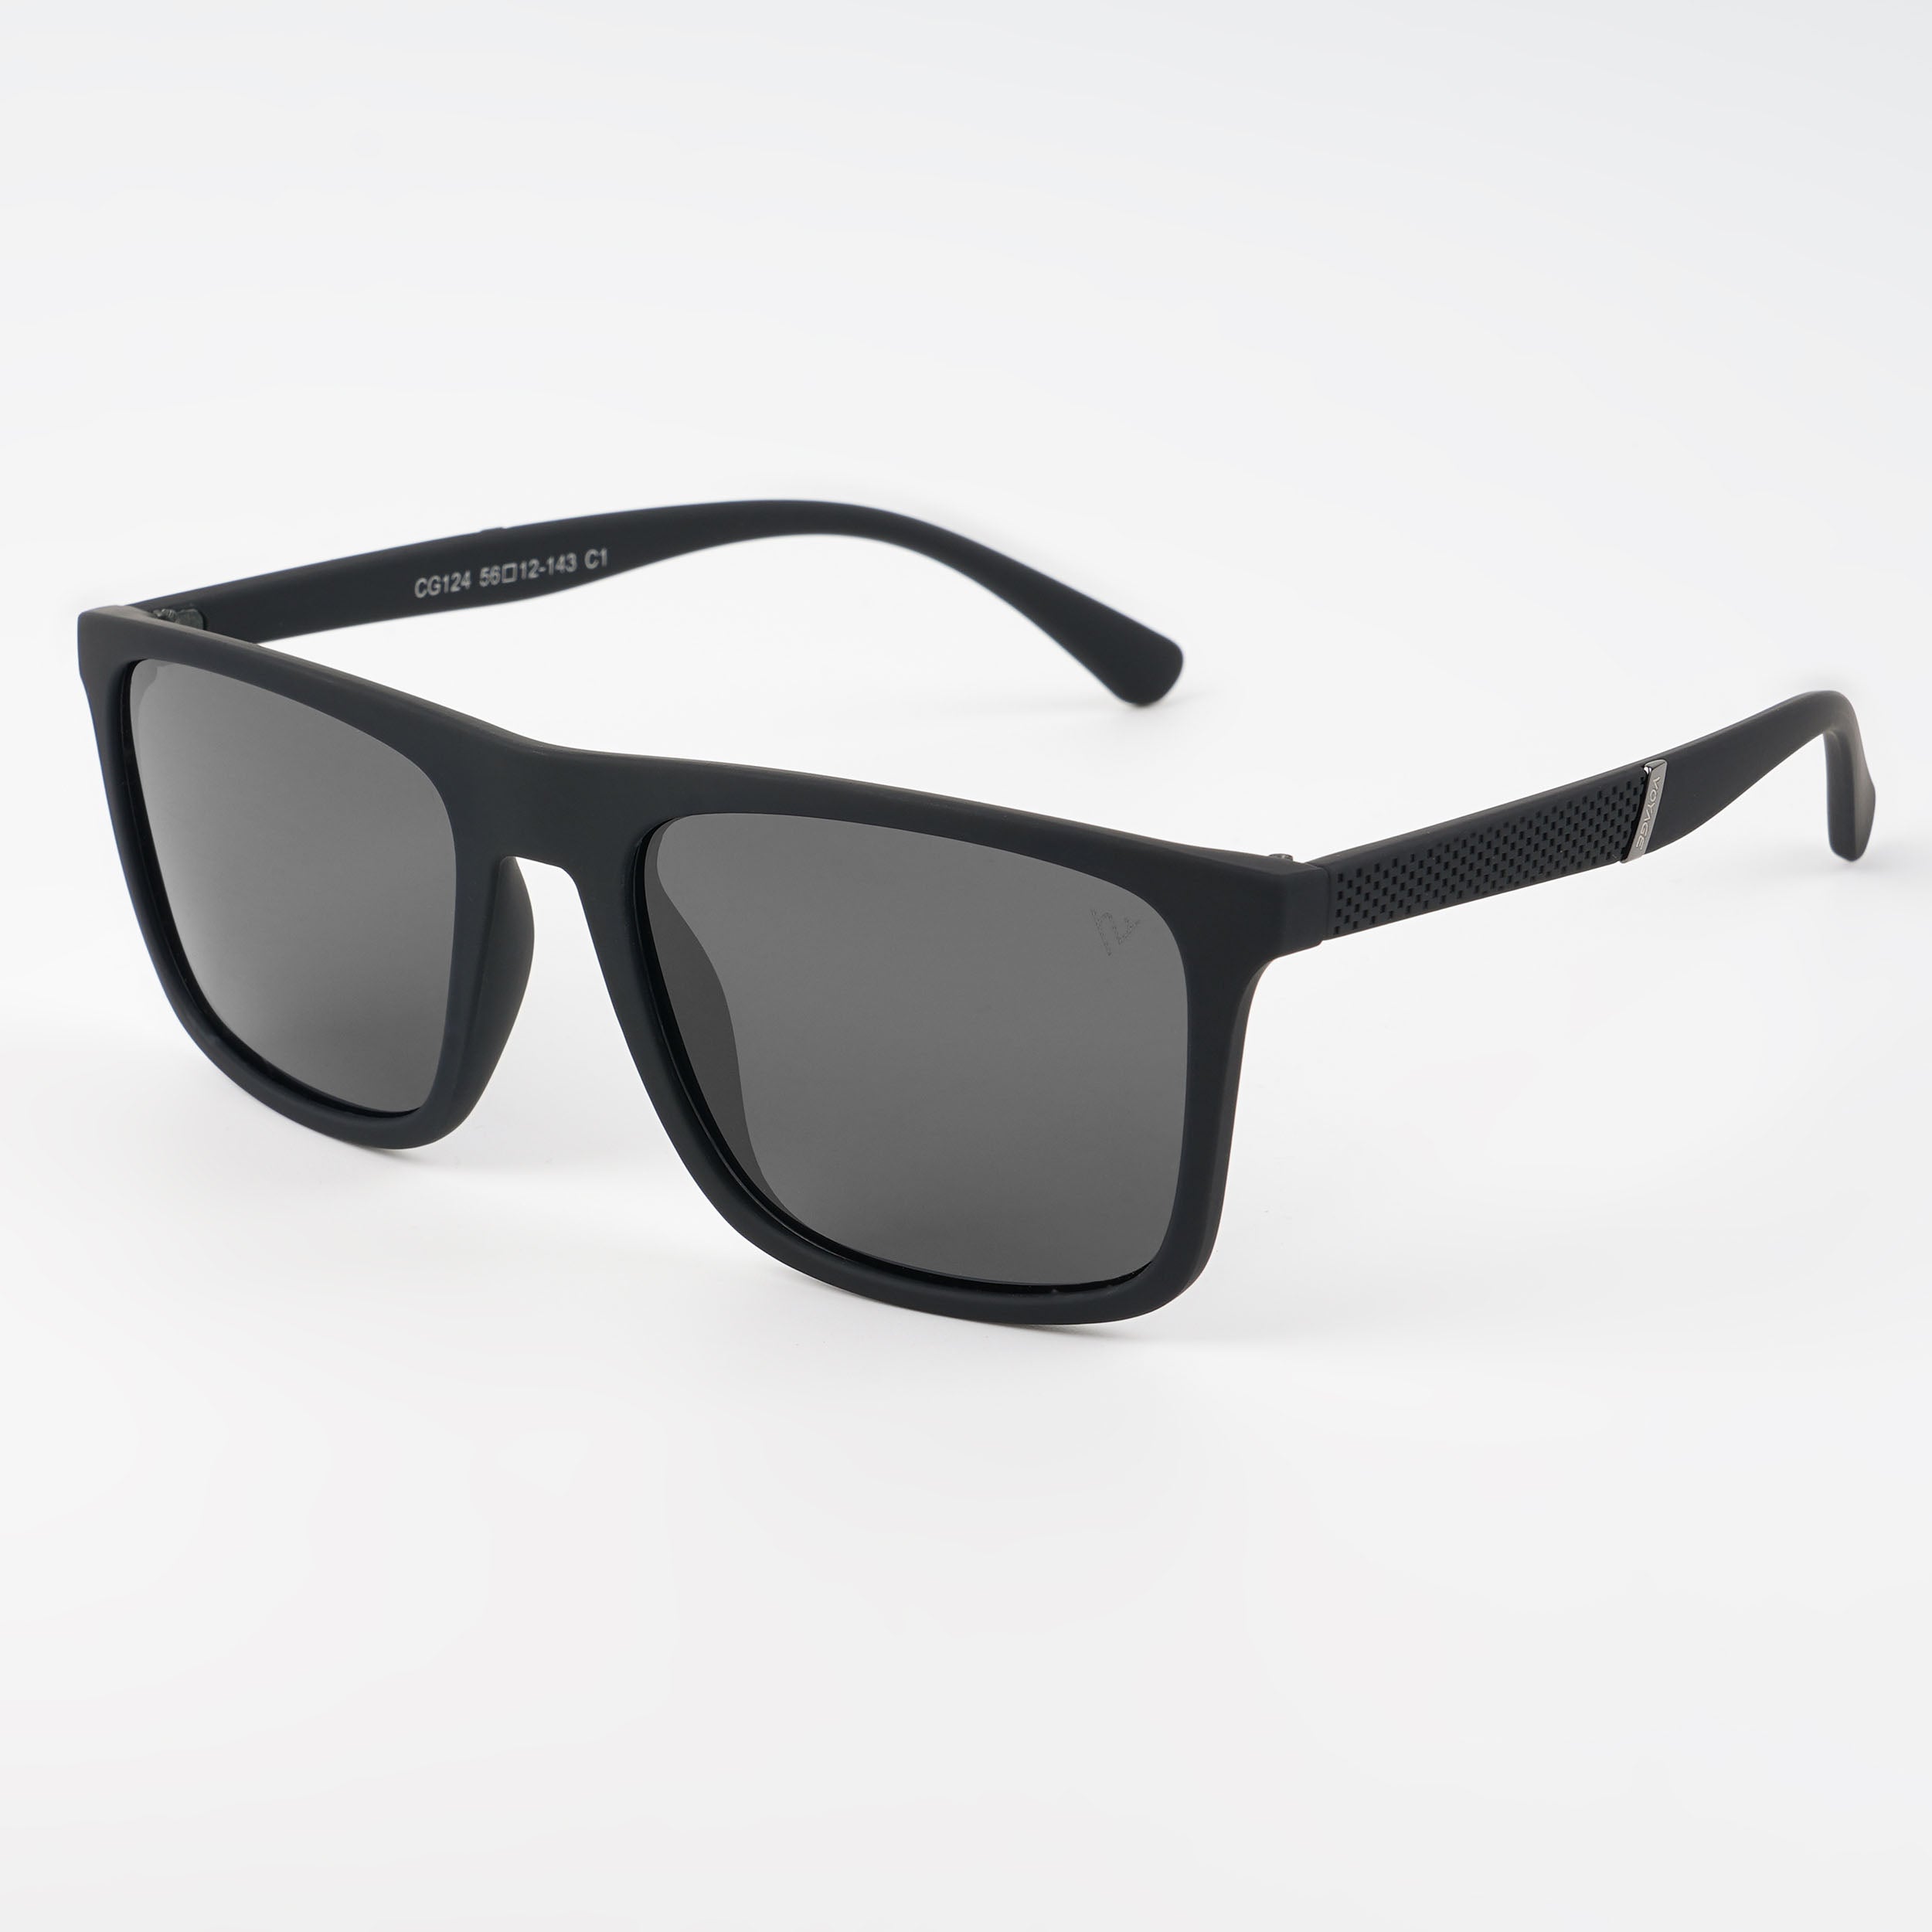 Voyage Exclusive Wayfarer Polarized Sunglasses for Men & Women (Black Lens | Matt Black Frame - PMG5256)